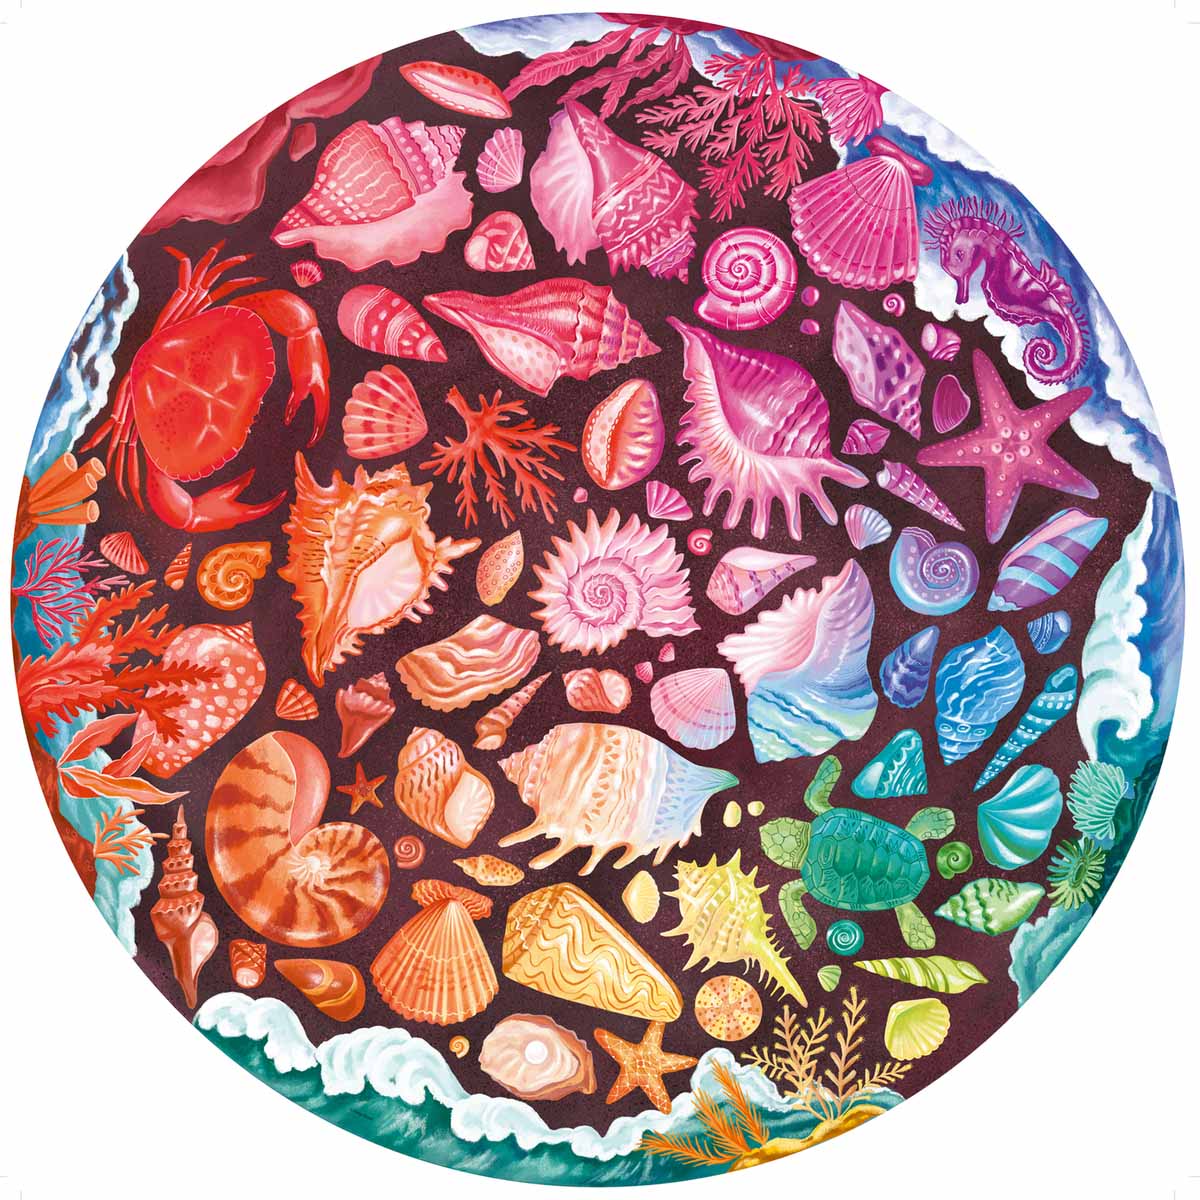 Seashells Circular Collage Jigsaw Puzzle